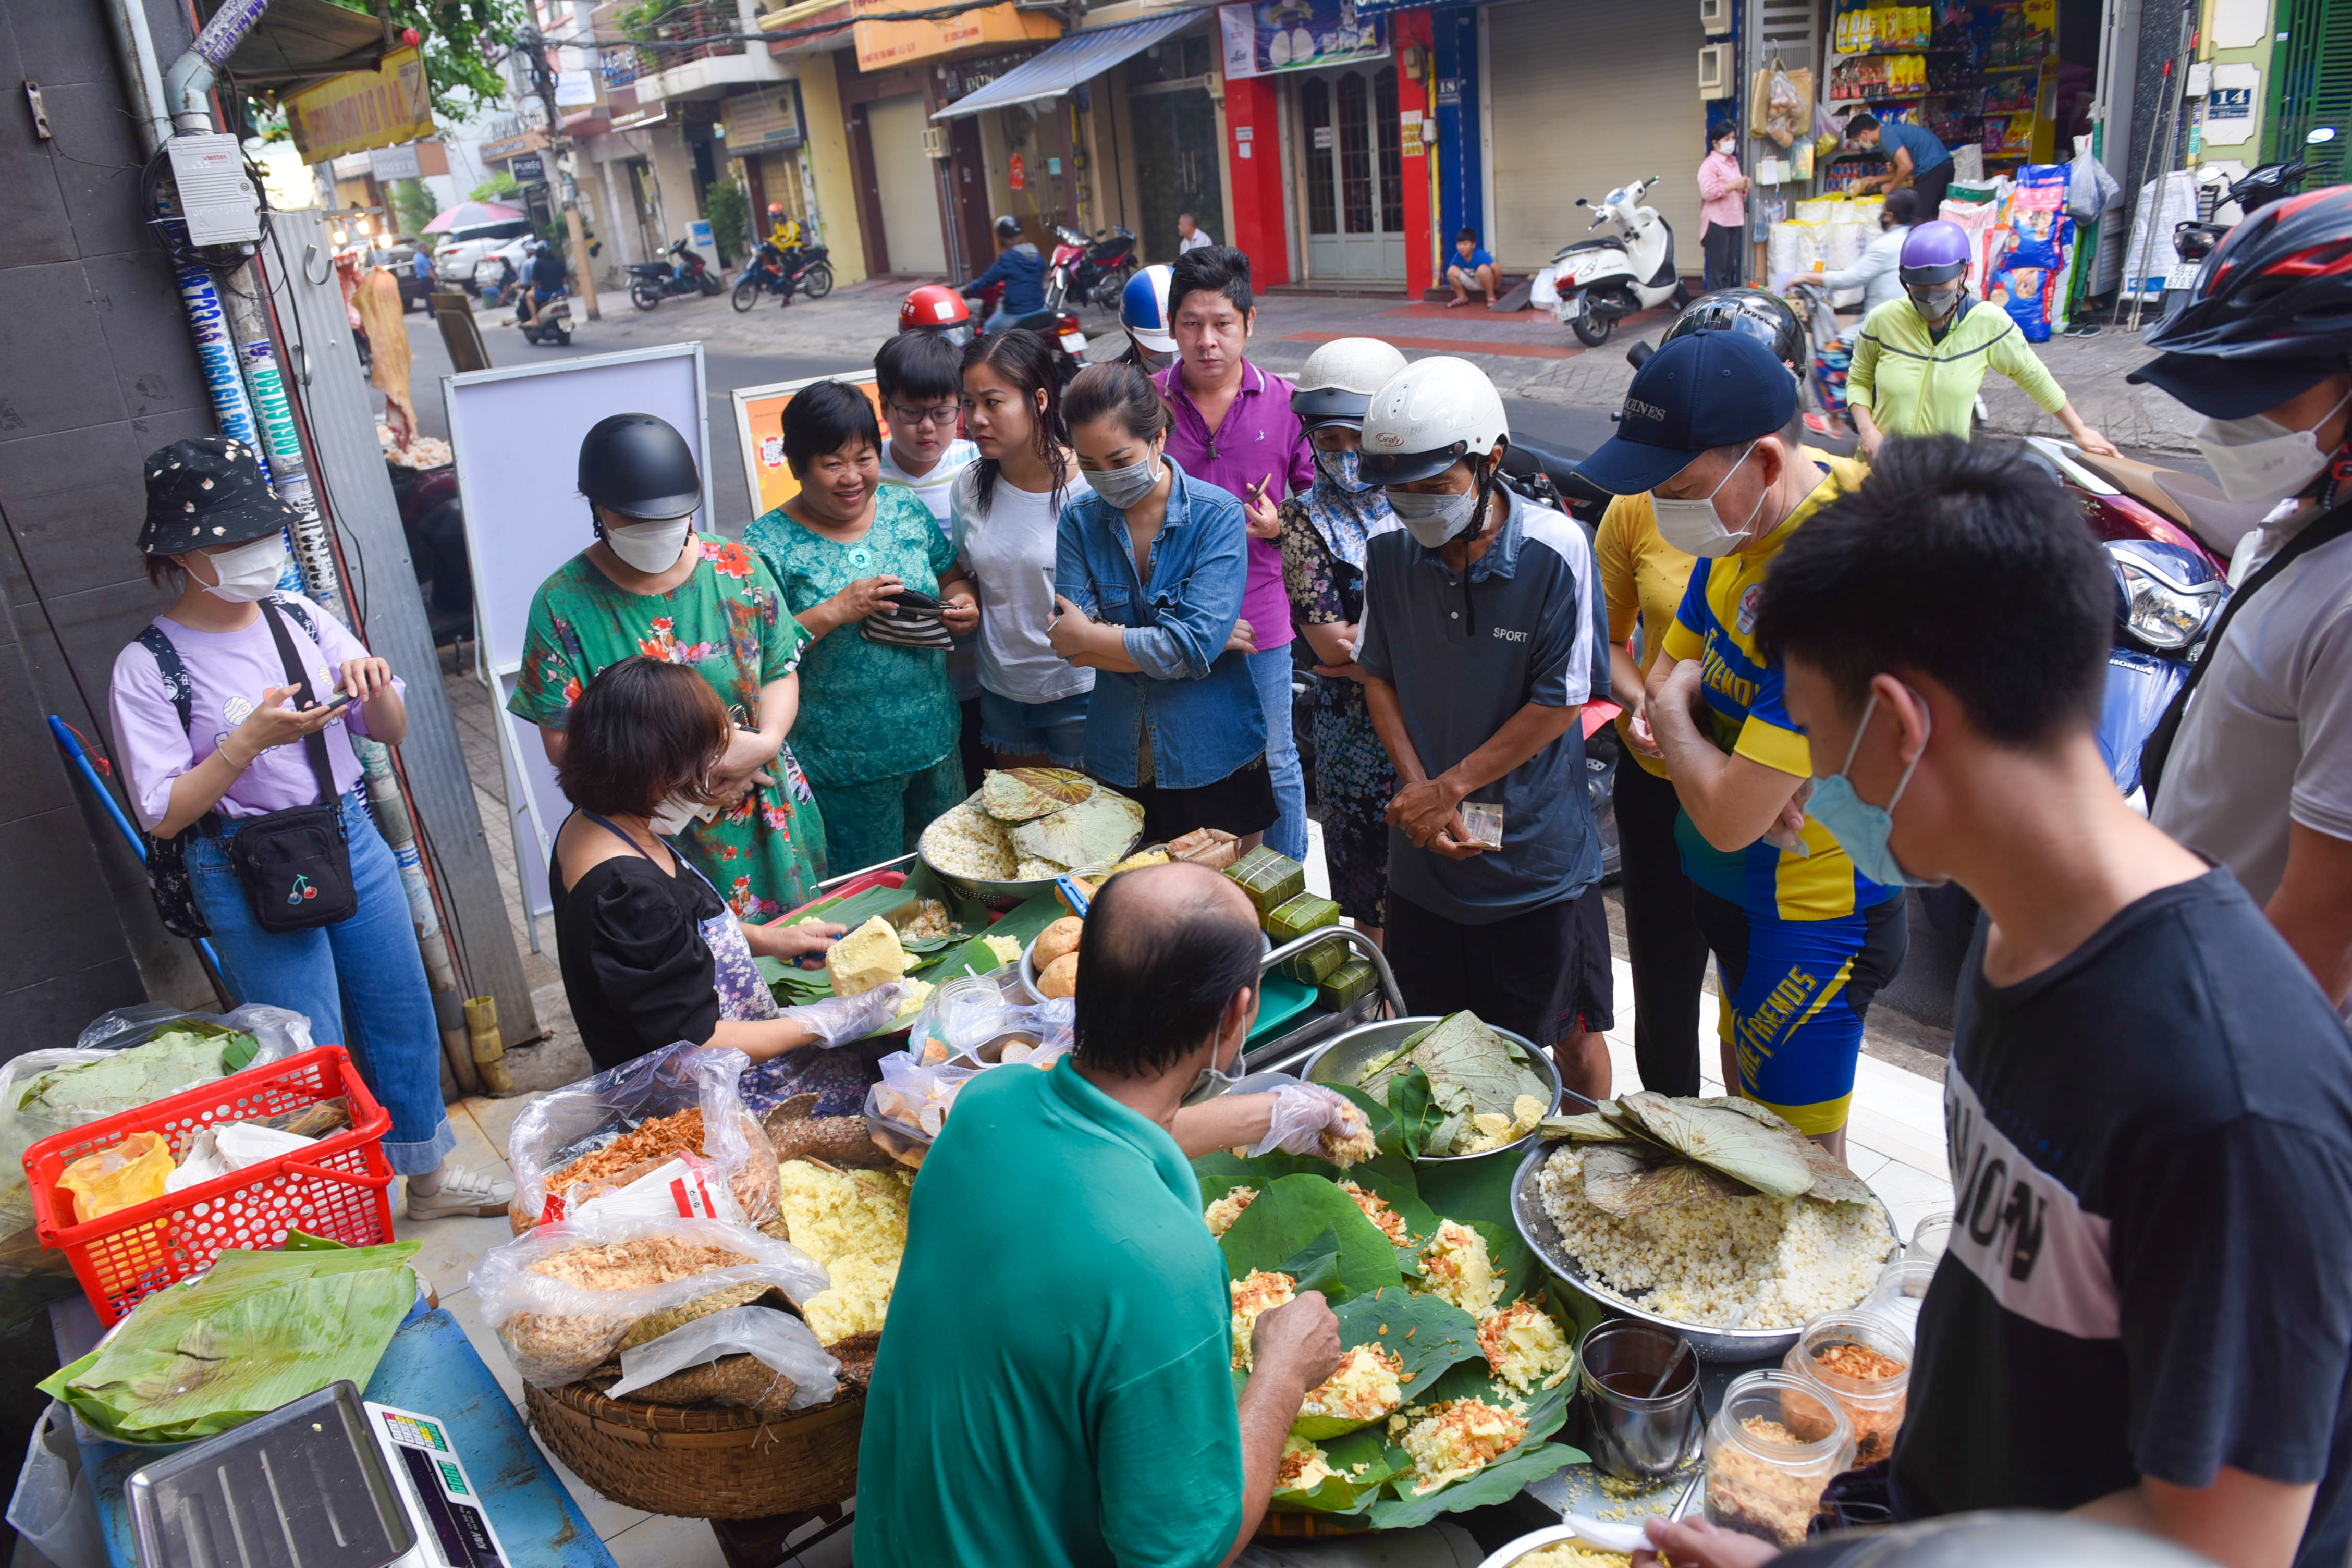 People await a plate of sticky rice at Hanh’s stall at 35 Ngo Thi Thu Minh, Ward 2, Tan Binh District, Ho Chi Minh City. Photo: Ngoc Phuong / Tuoi Tre News